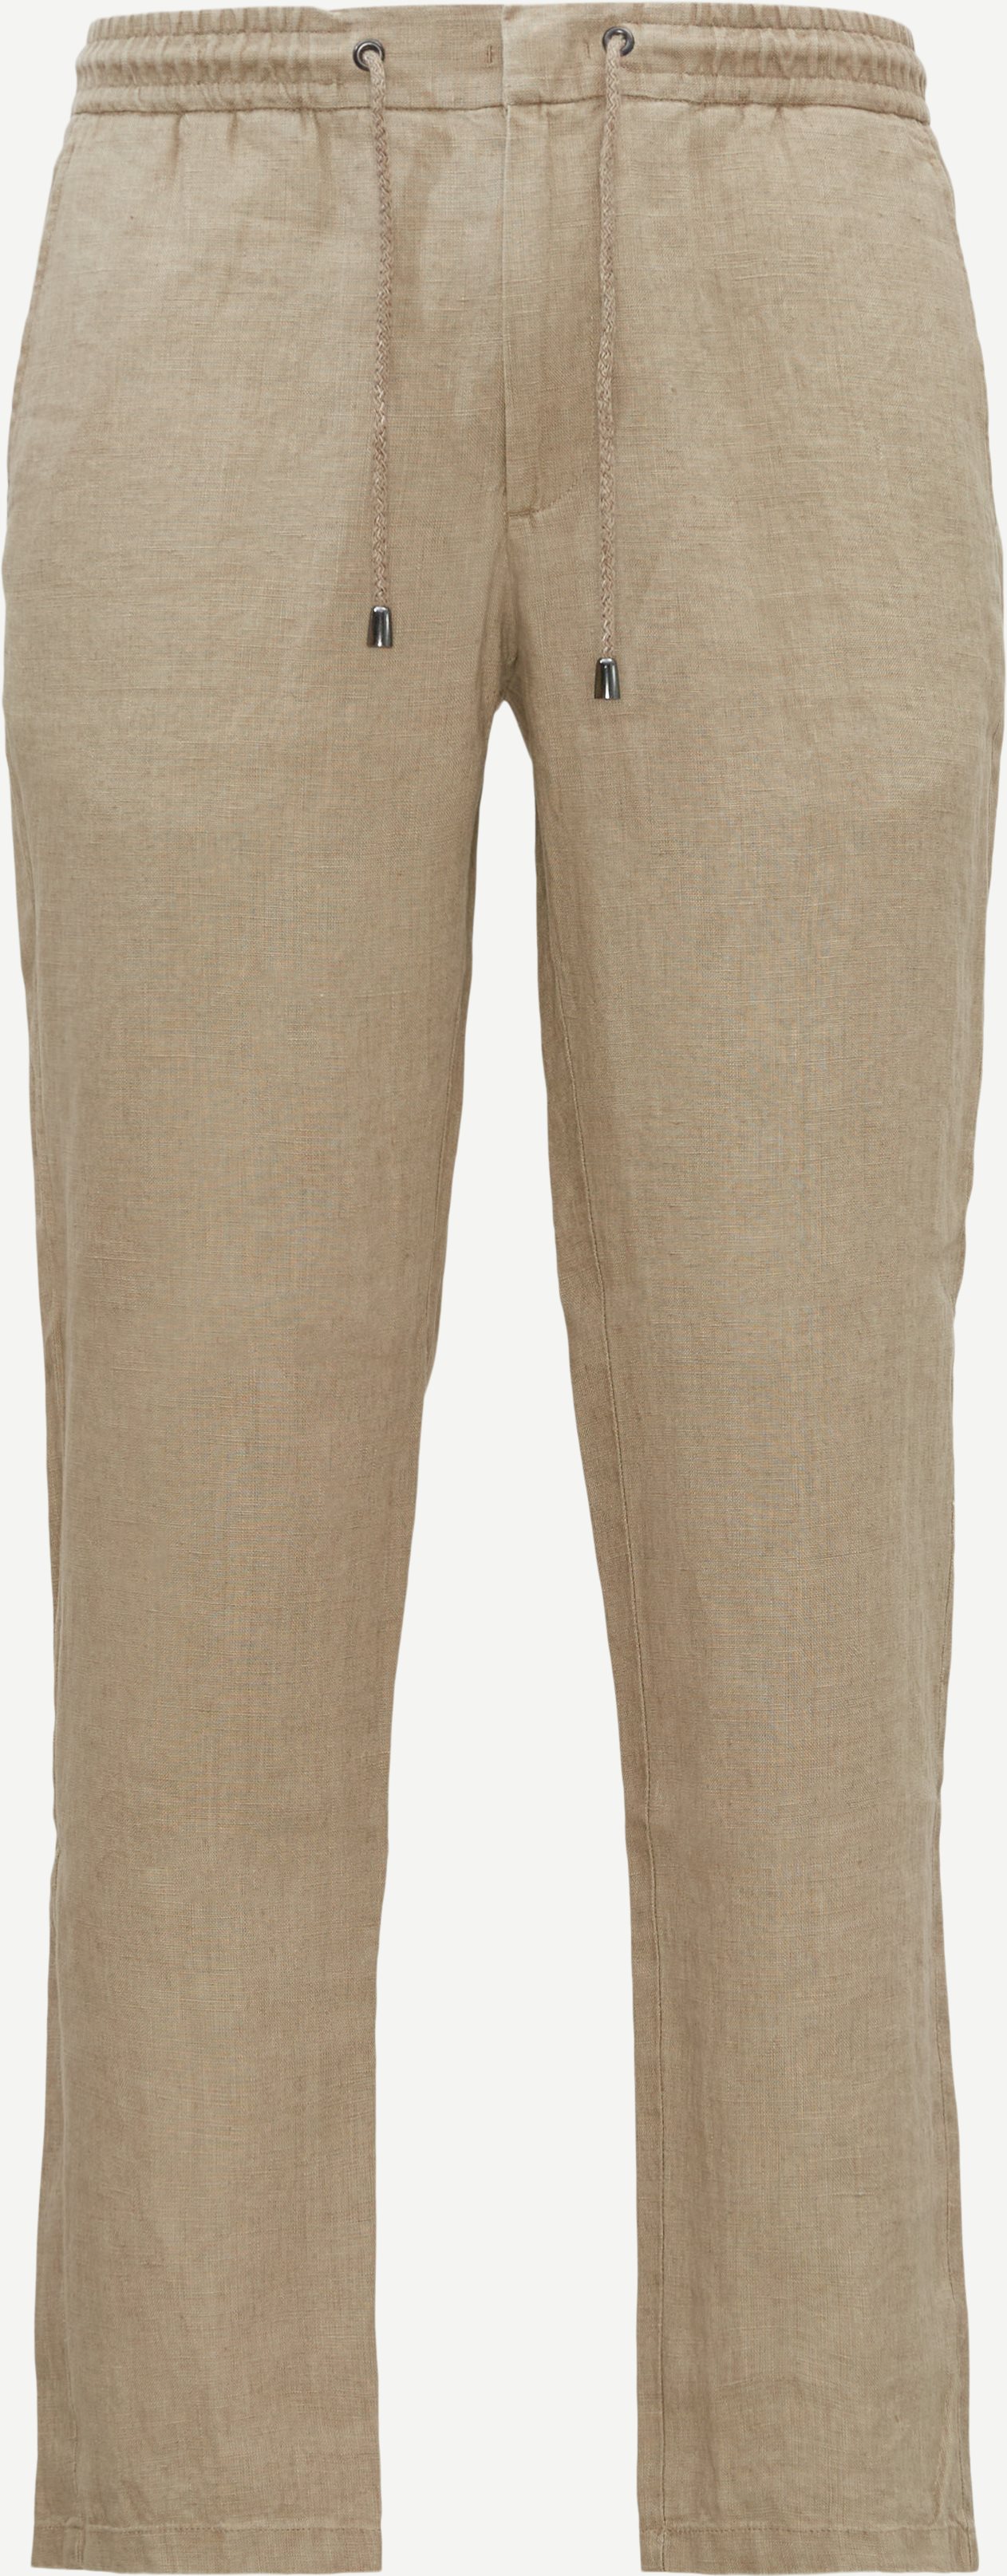 Sand Trousers 1680 JASON S Sand